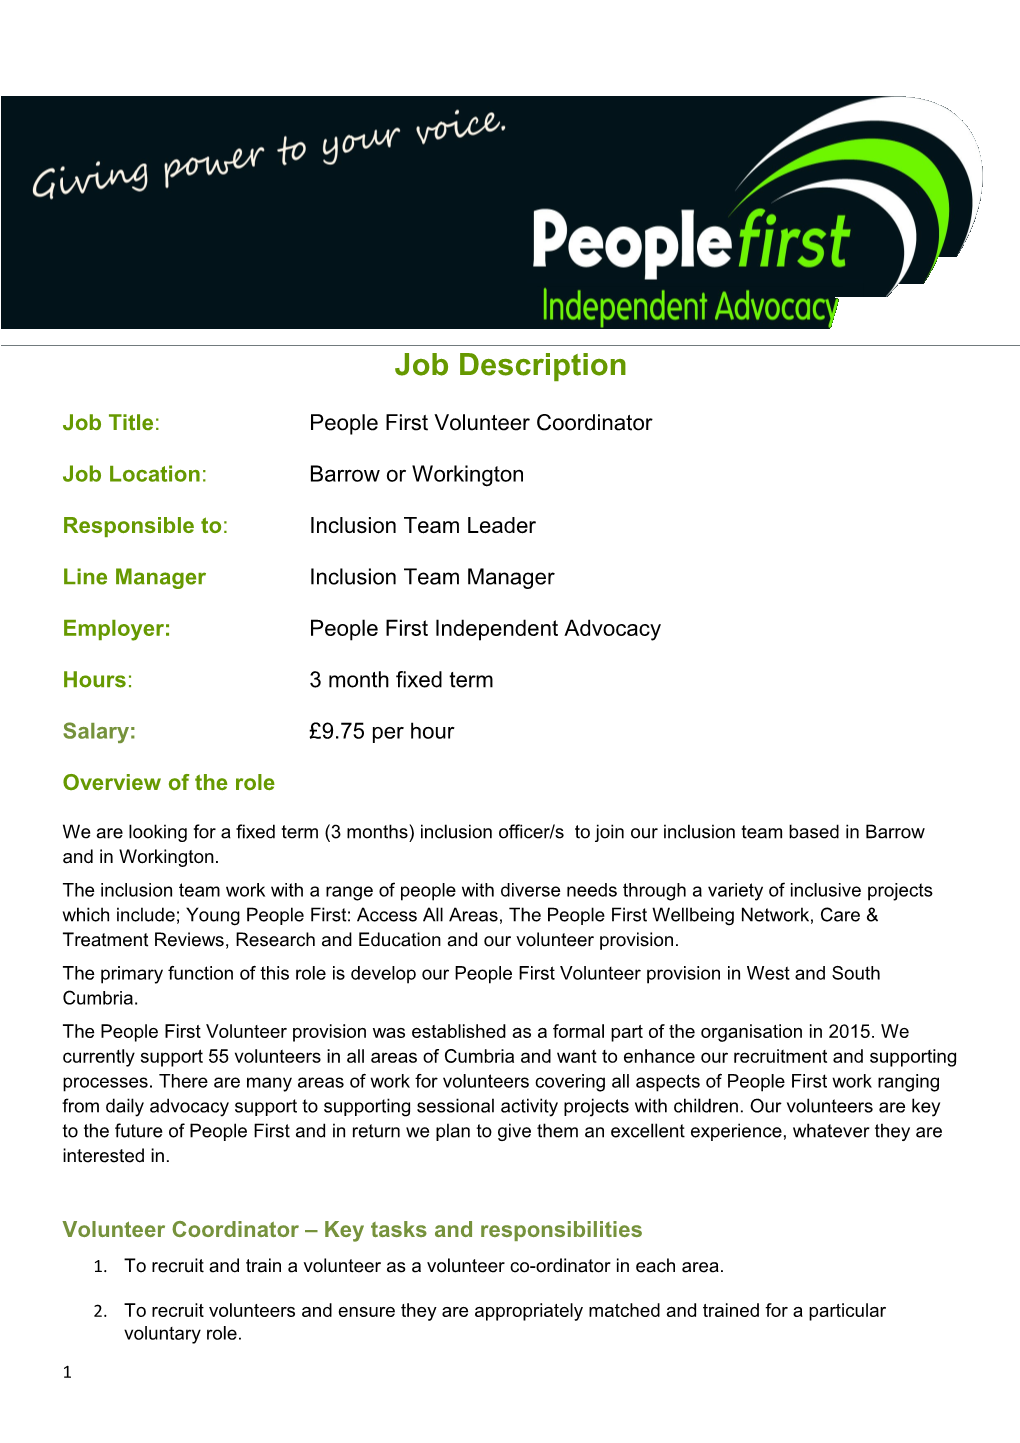 Job Title: People First Volunteer Coordinator